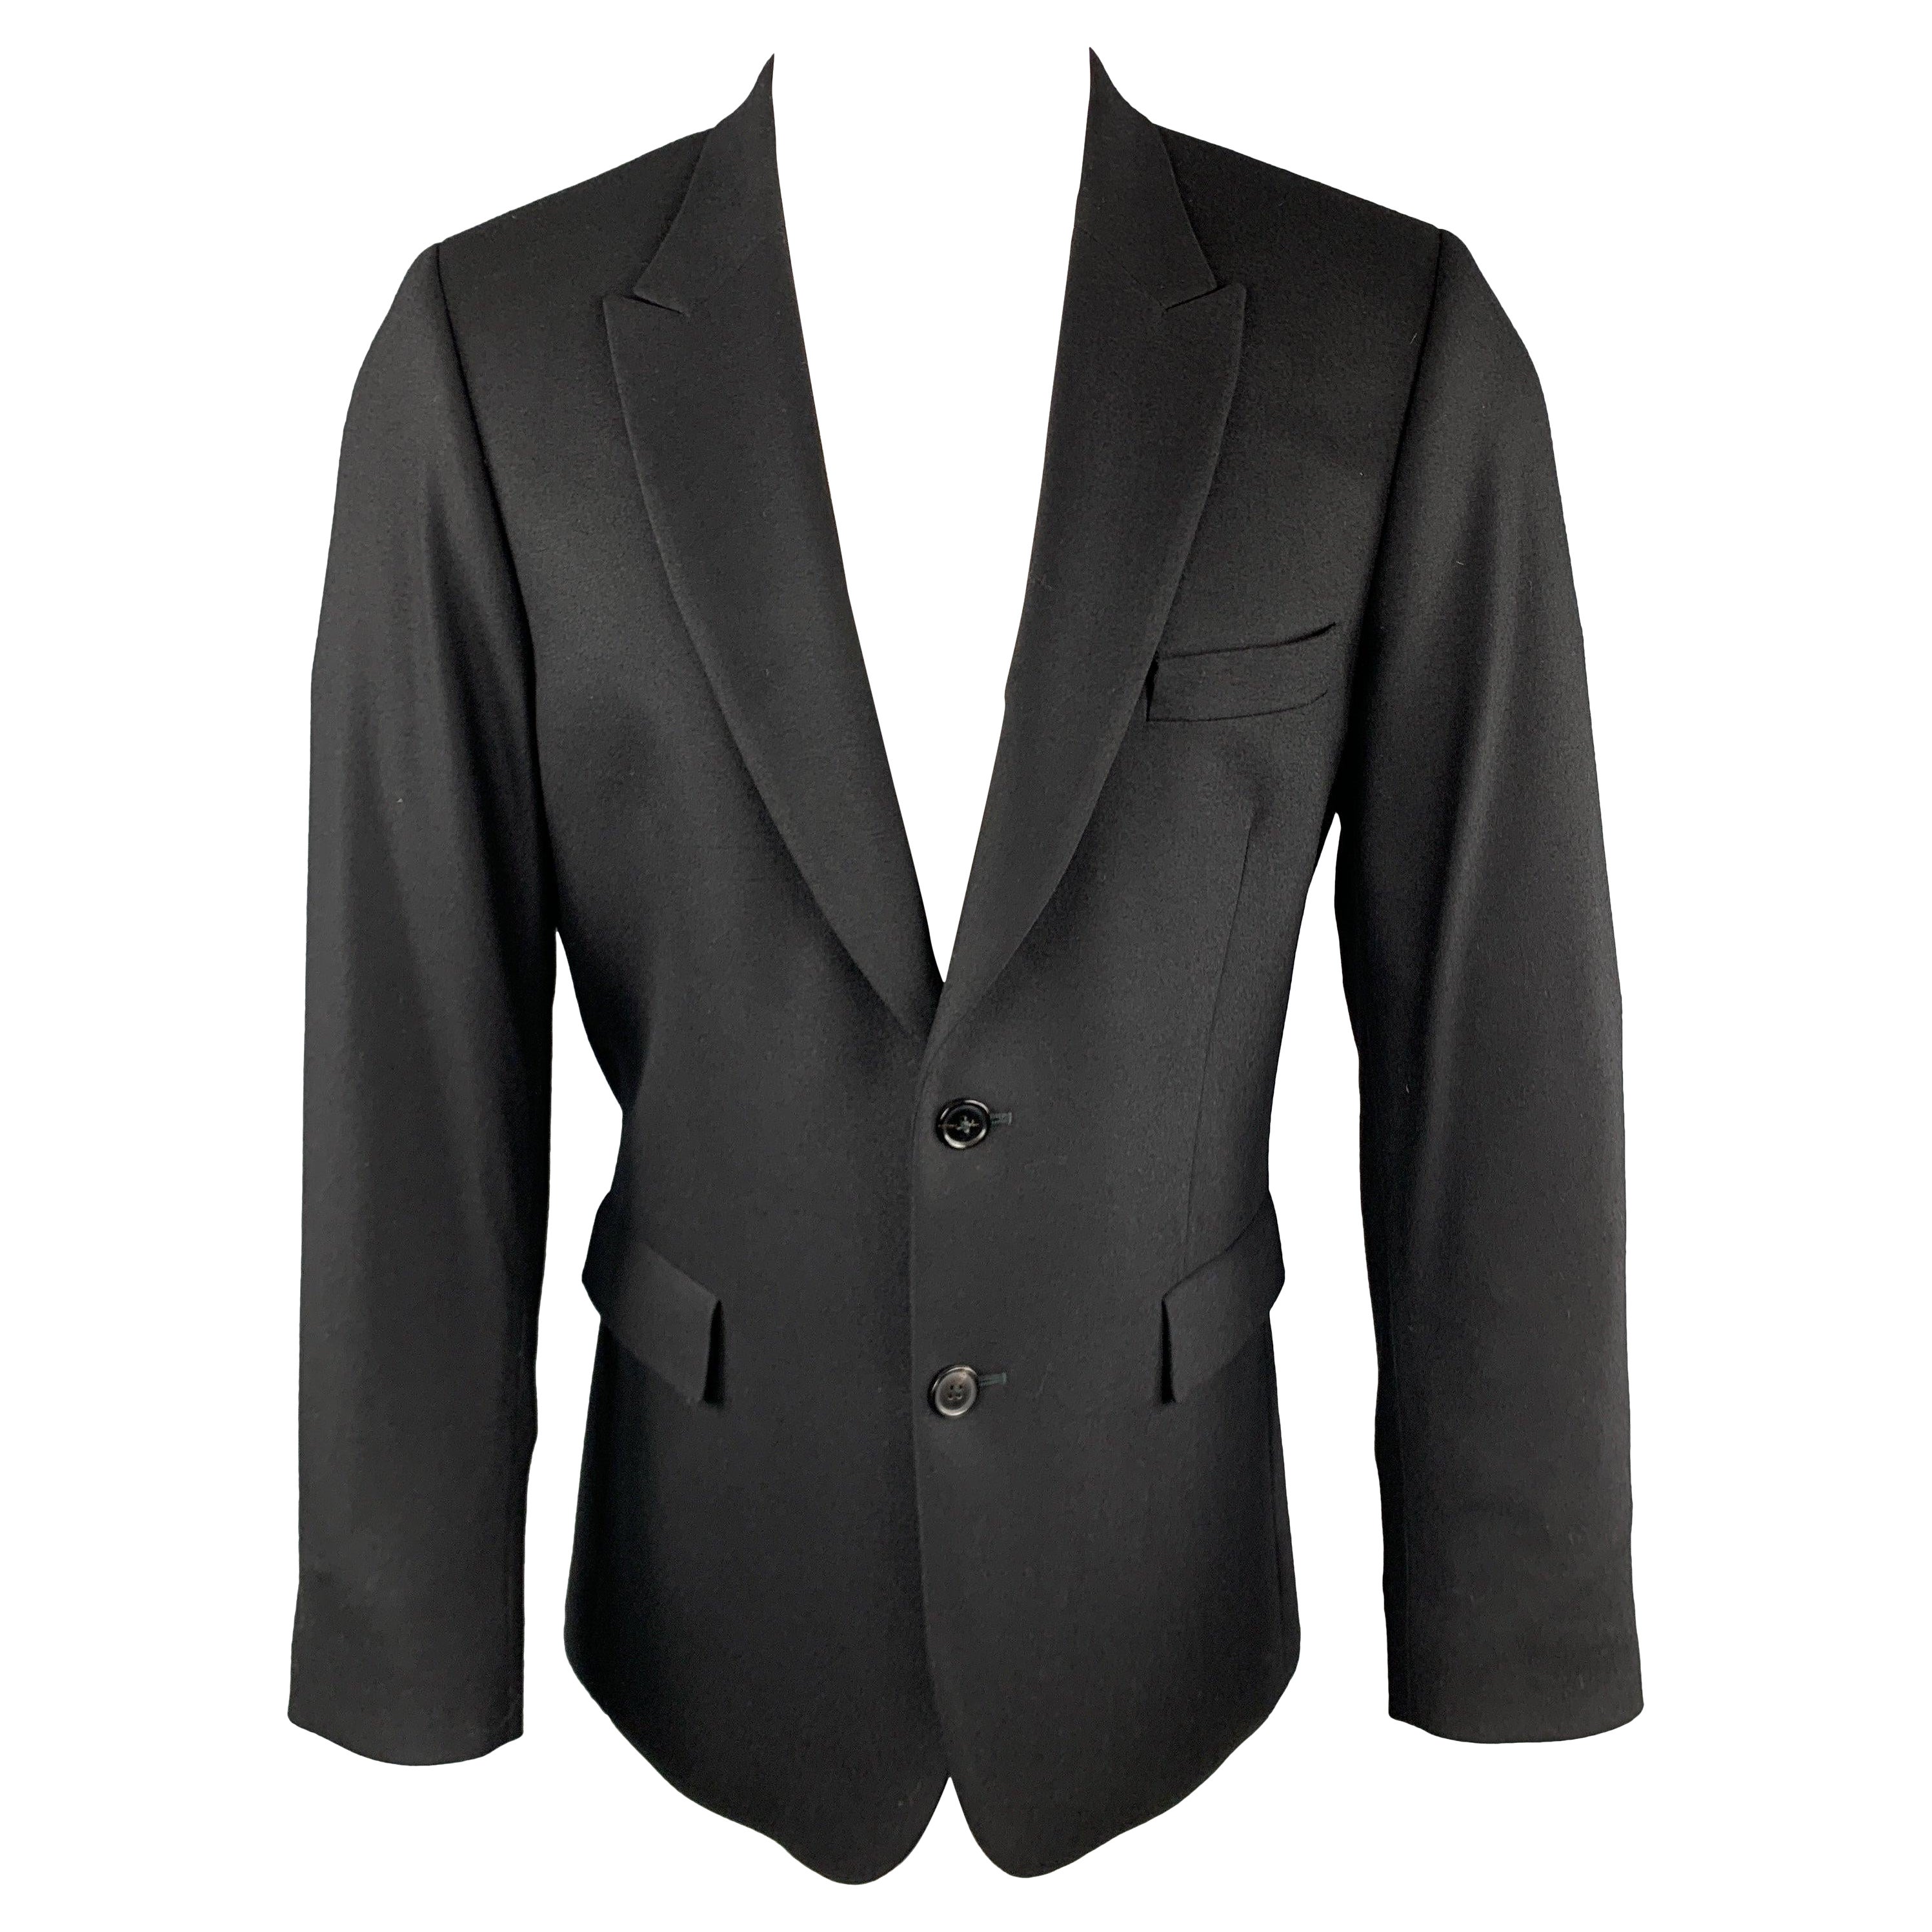 PAUL SMITH Size 40 Black Wool / Cashmere Peak Lapel Sport Coat For Sale